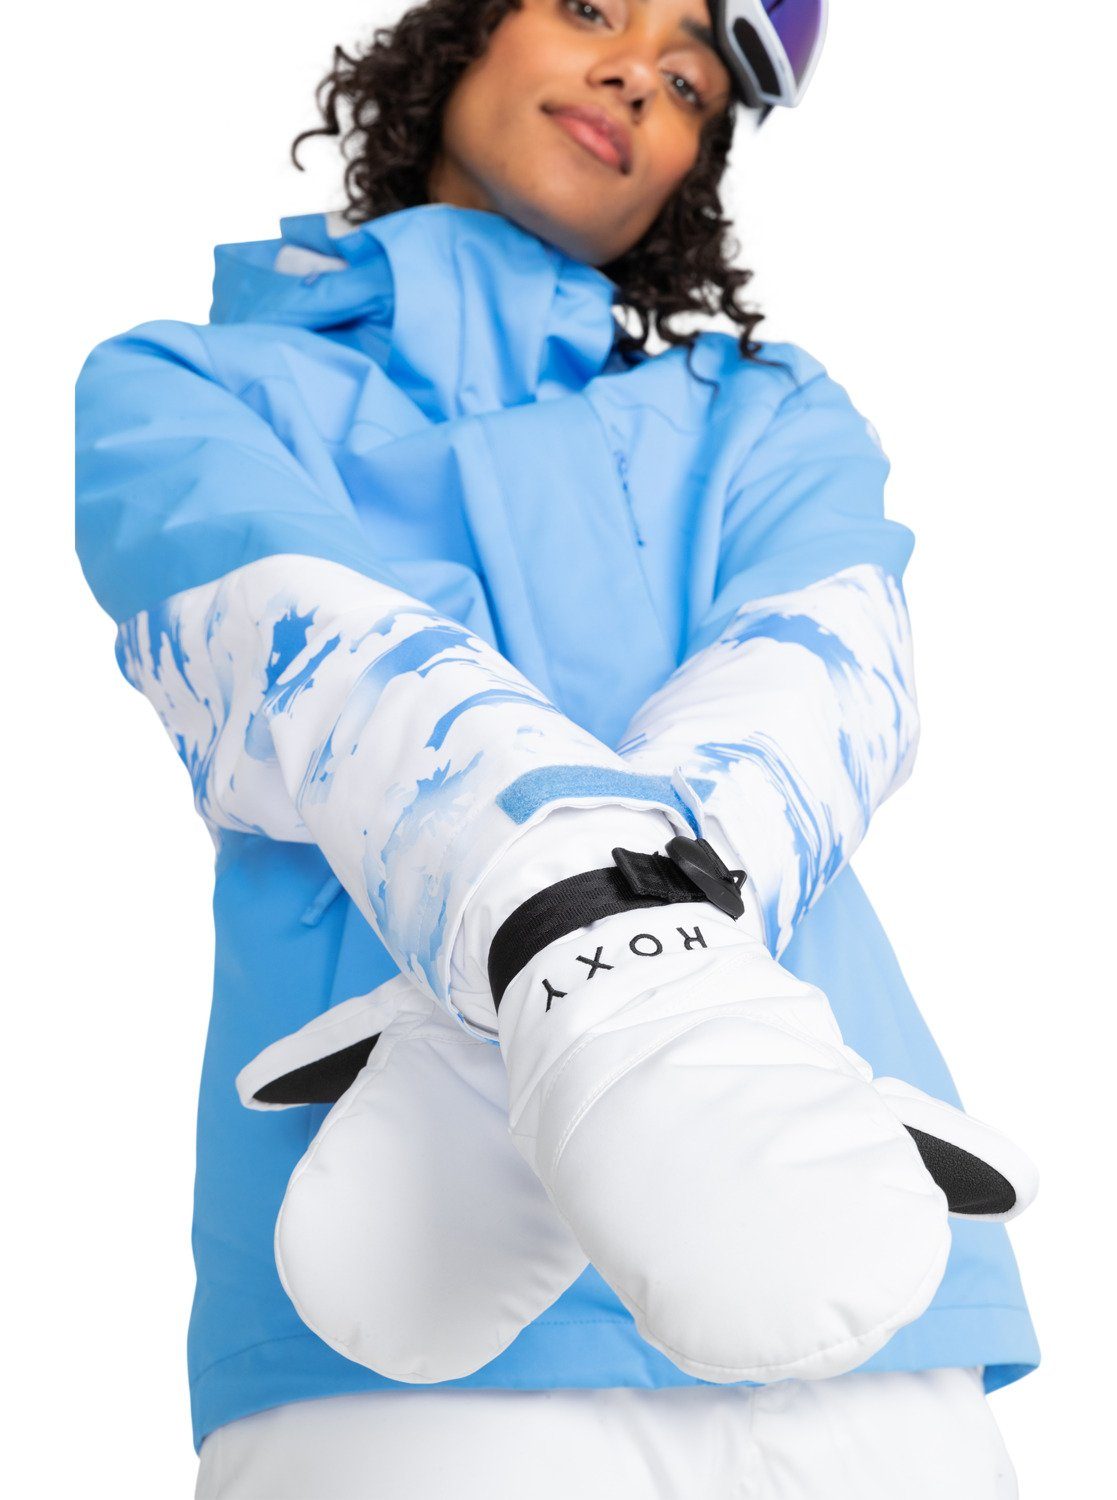 White Bright ROXY Snowboardhandschuhe Roxy Jetty